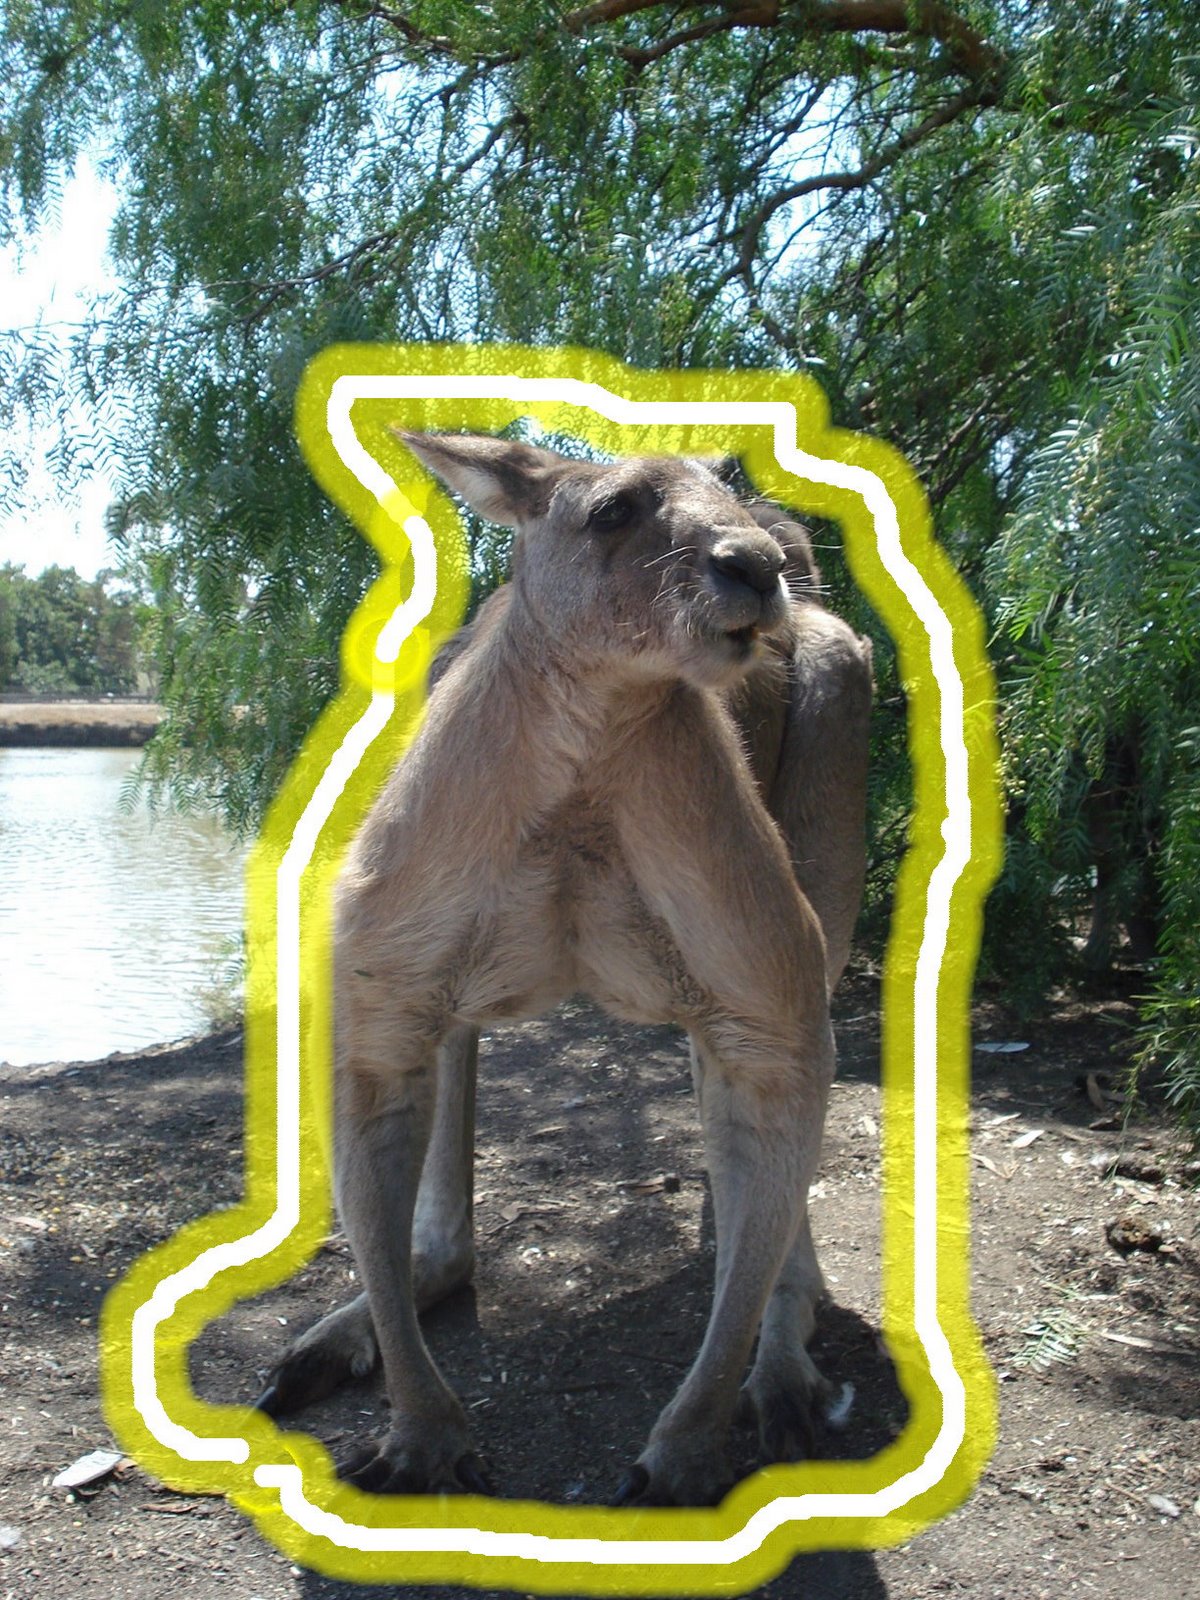 [kangaroo.jpg]